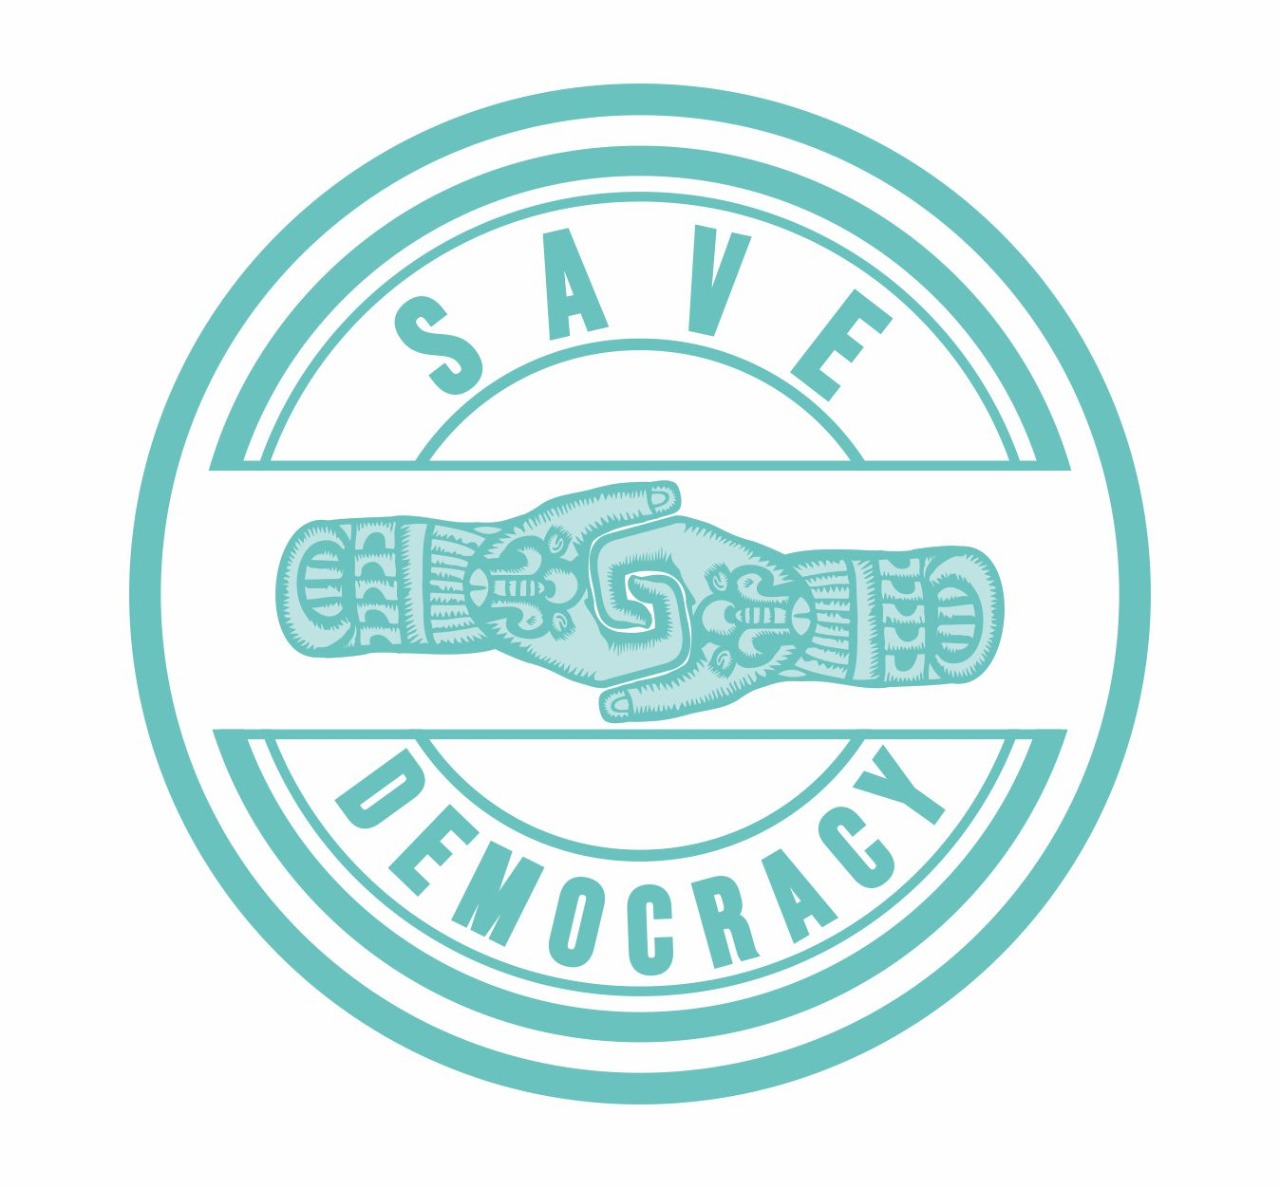 Save Democracy